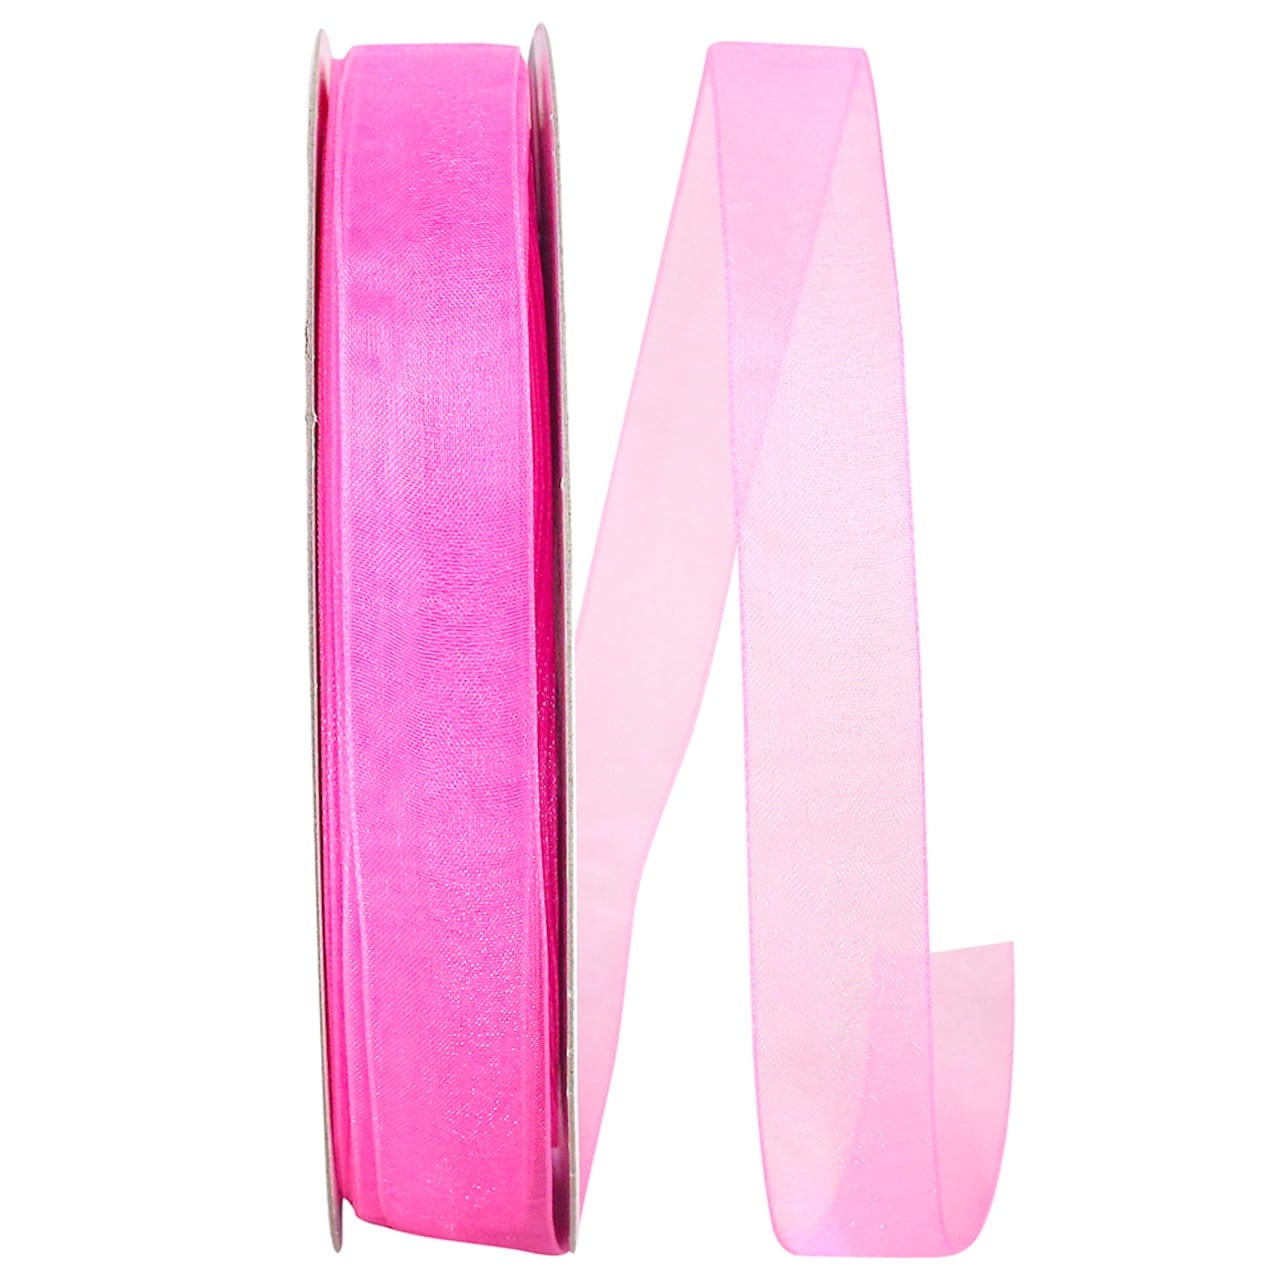 Hot Pink Chiffon 7/8 inch x 100 Yards Sheer Ribbon - by Jam Paper